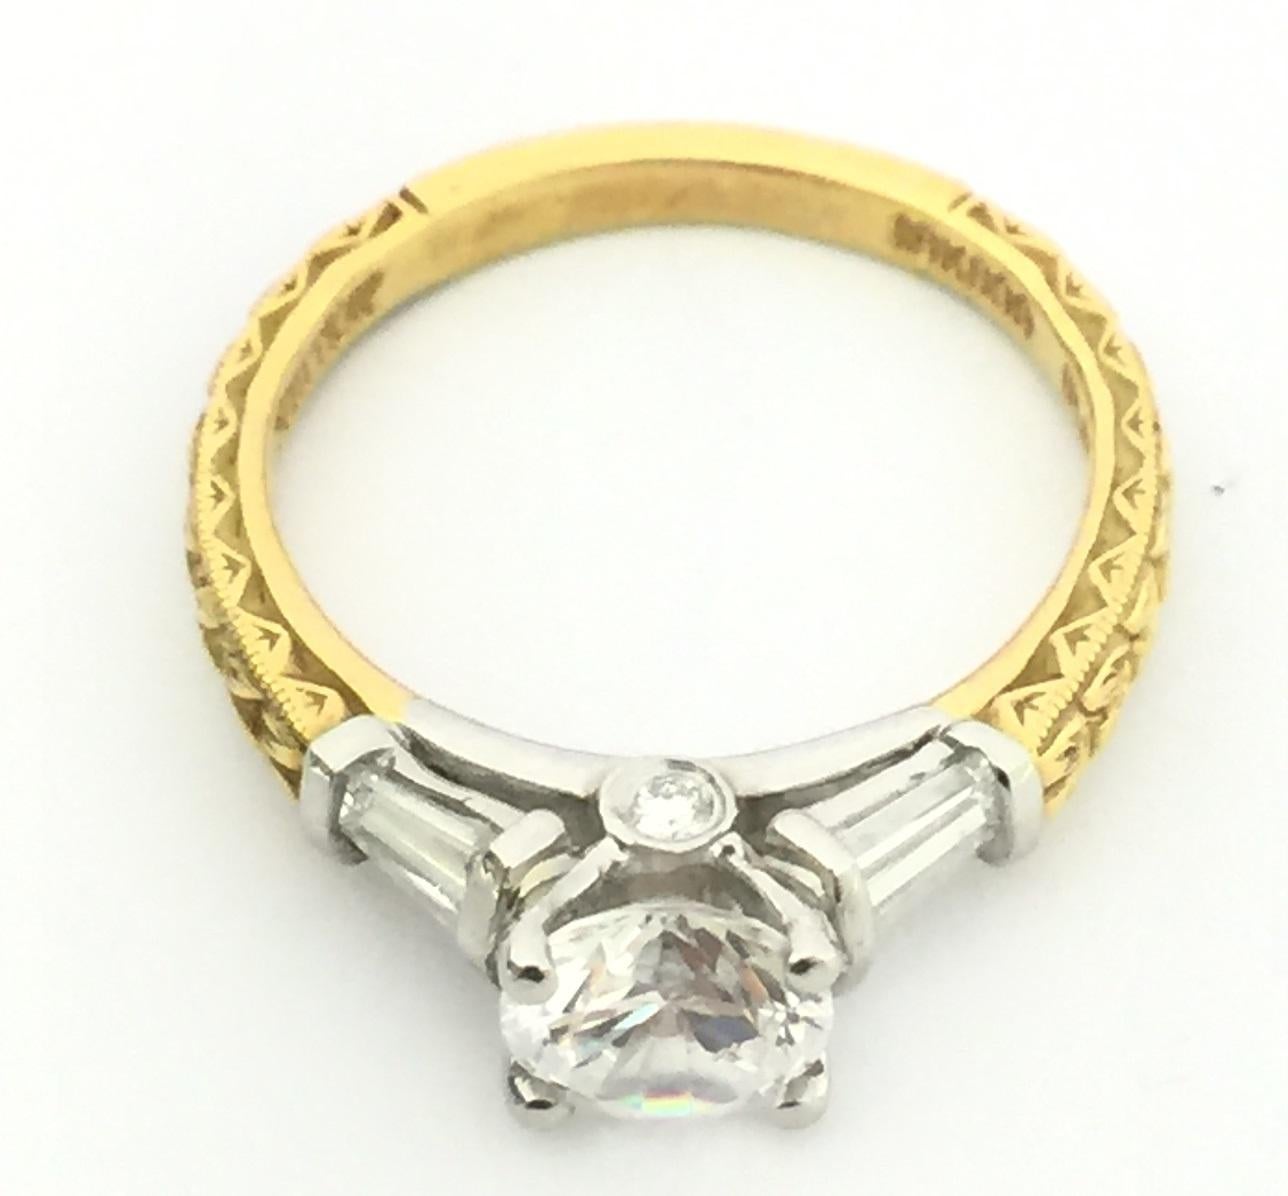 Scott Kay Ladies Diamond Setting in 19k Yellow Gold and Platinum
Diamond 0.42 carat total weight 
Ring Size 6 1/2
M1123BDRD10PPR